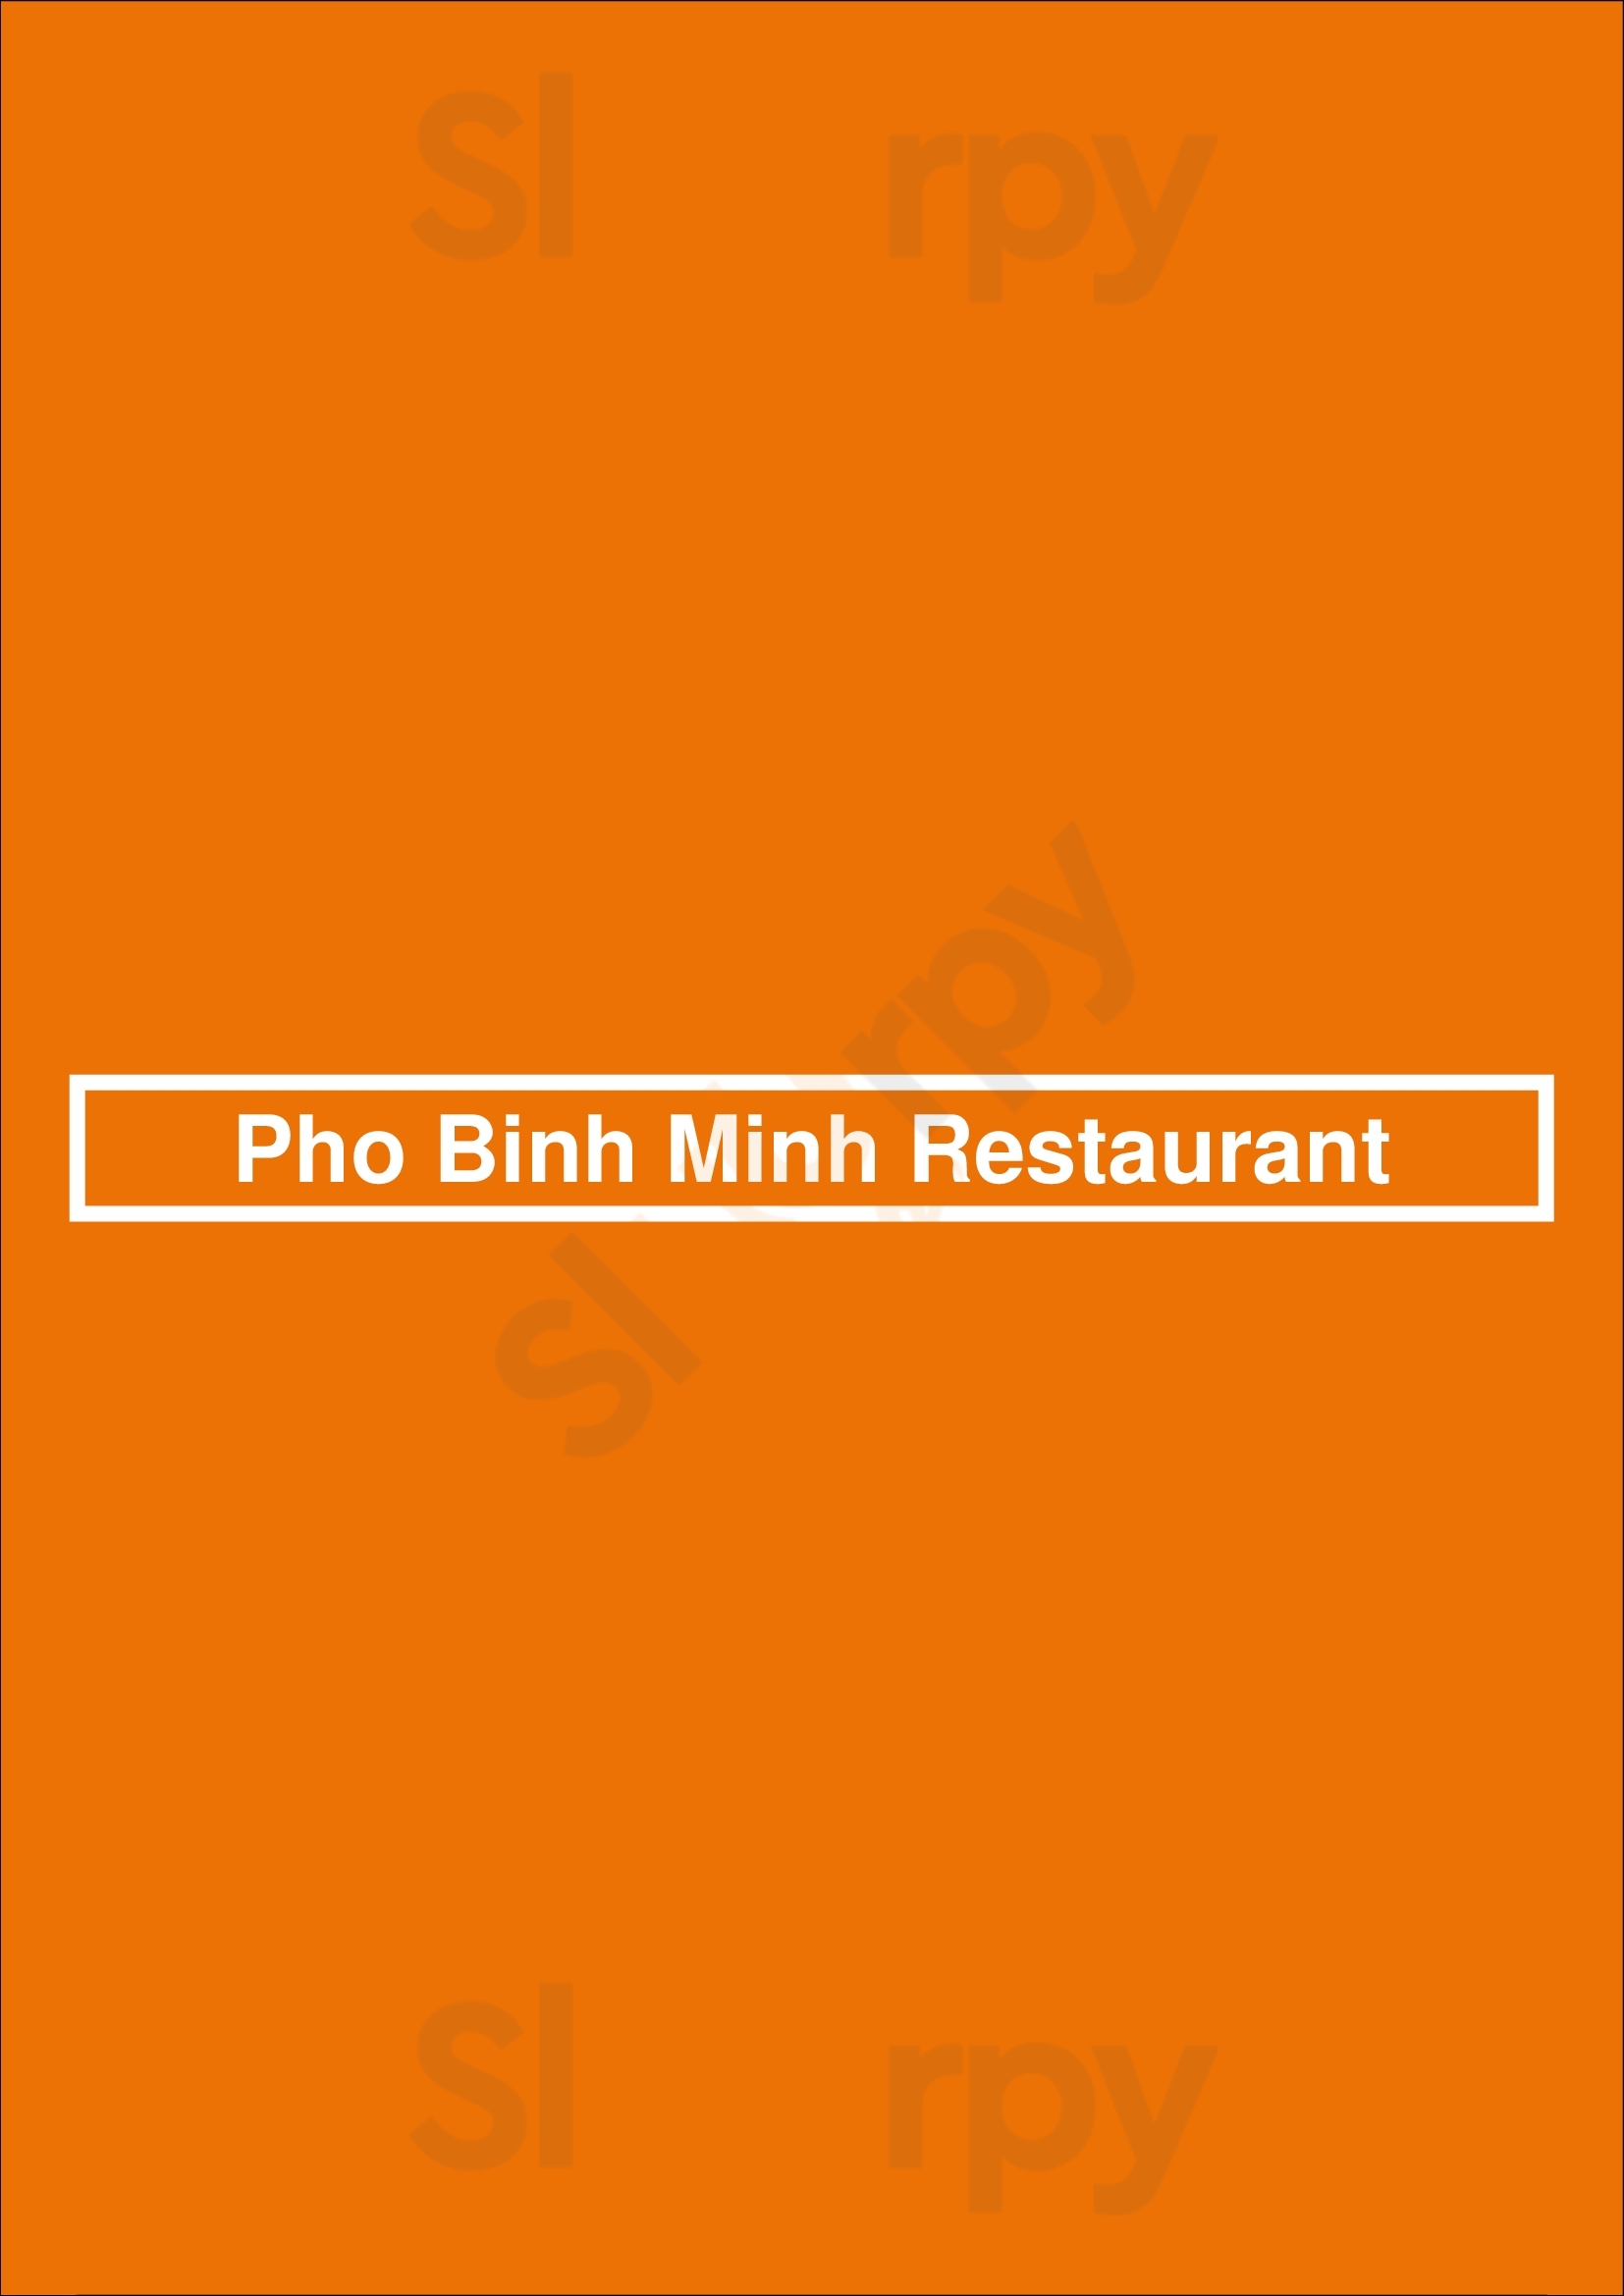 Pho Binh Minh Restaurant Calgary Menu - 1